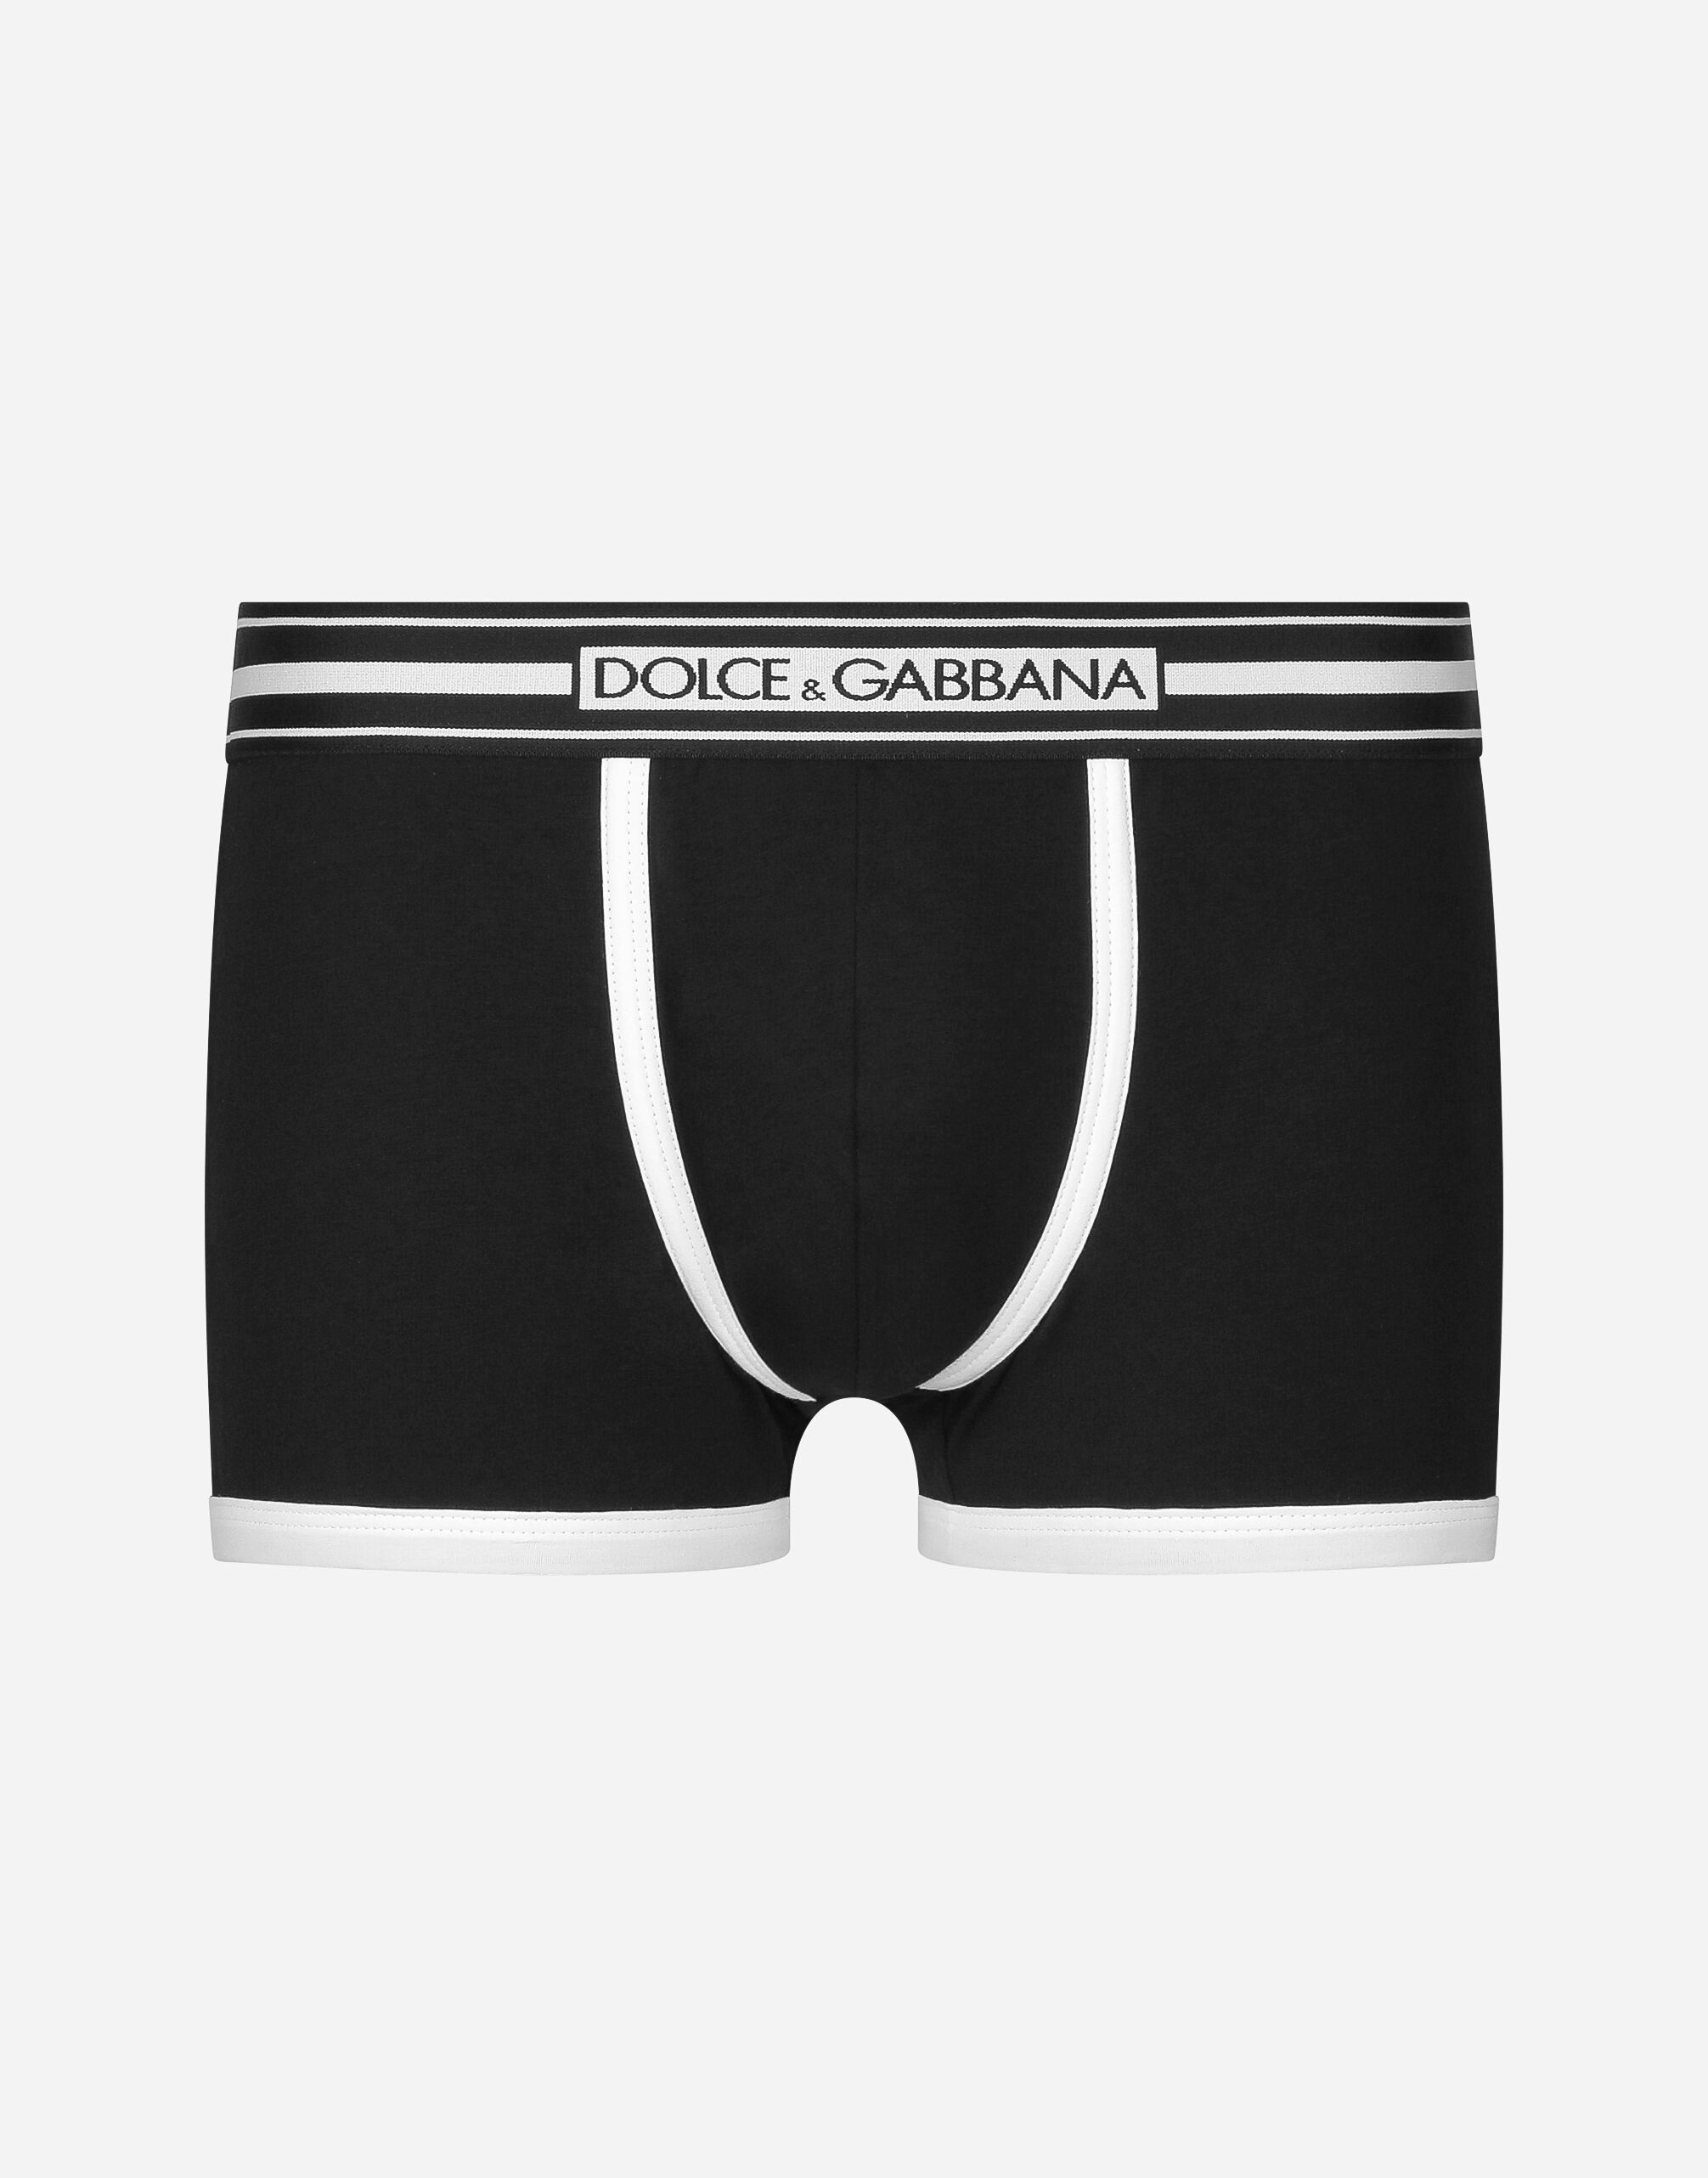 Dolce & Gabbana 양방향 스트레치 코튼 저지 레귤러핏 복서 브리프 블랙 M9C03JONN95